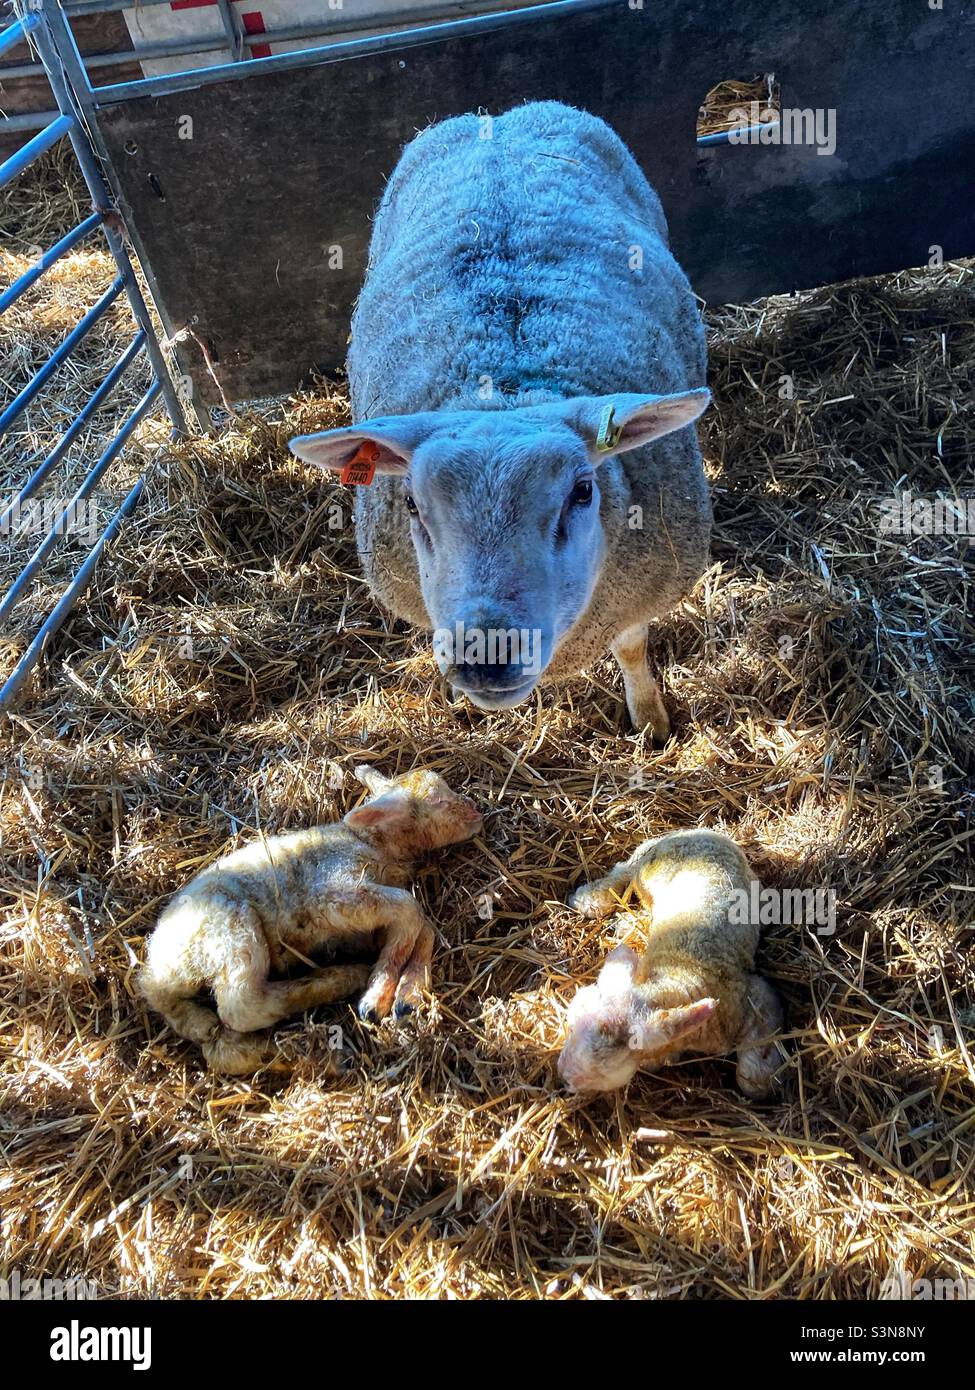 Lambing - baby lamb twins - newborn - farming Stock Photo